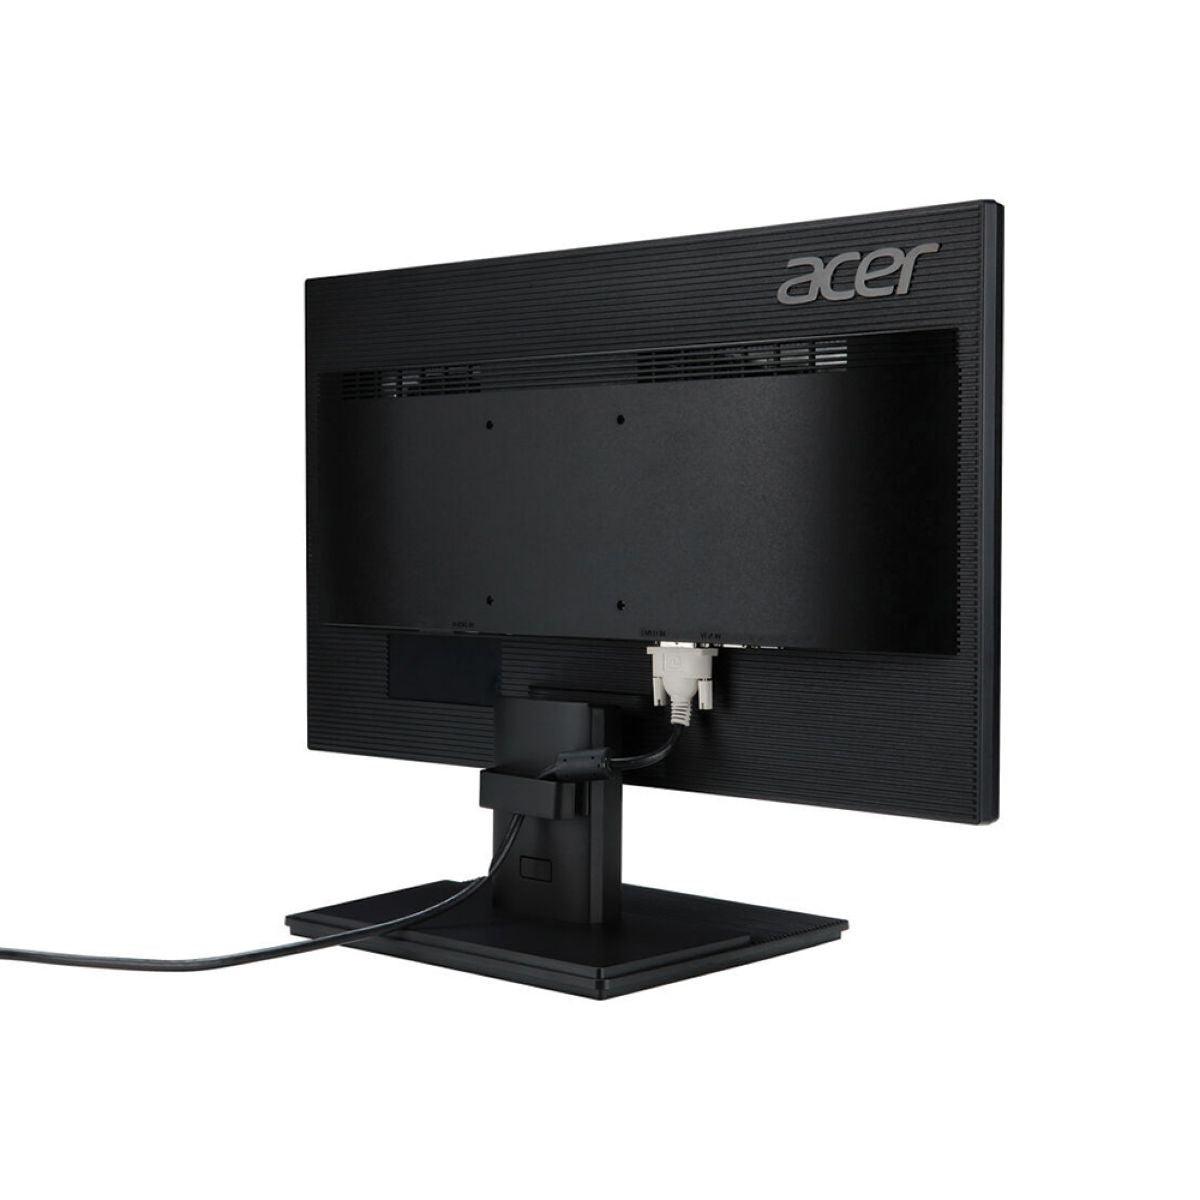 Monitor Acer V206HQL Abi HD 19.5" - Colmenero Shop